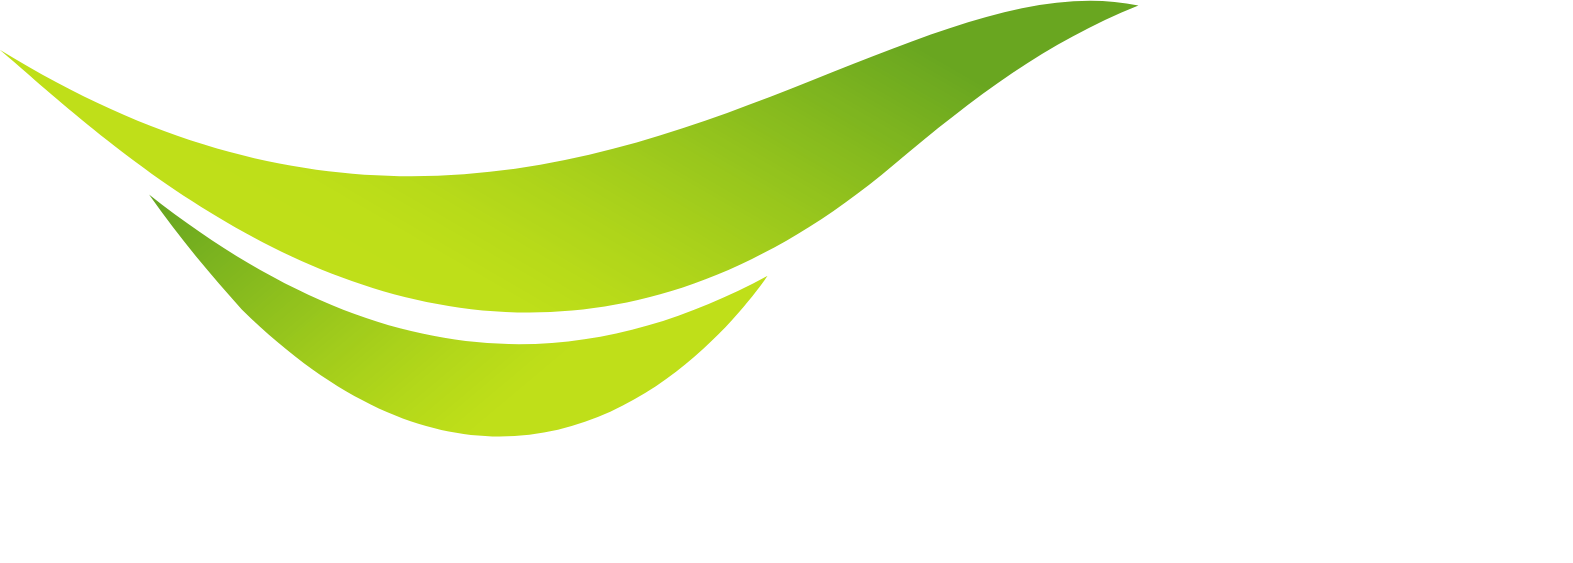 Advanced Info Service (AIS) logo large for dark backgrounds (transparent PNG)